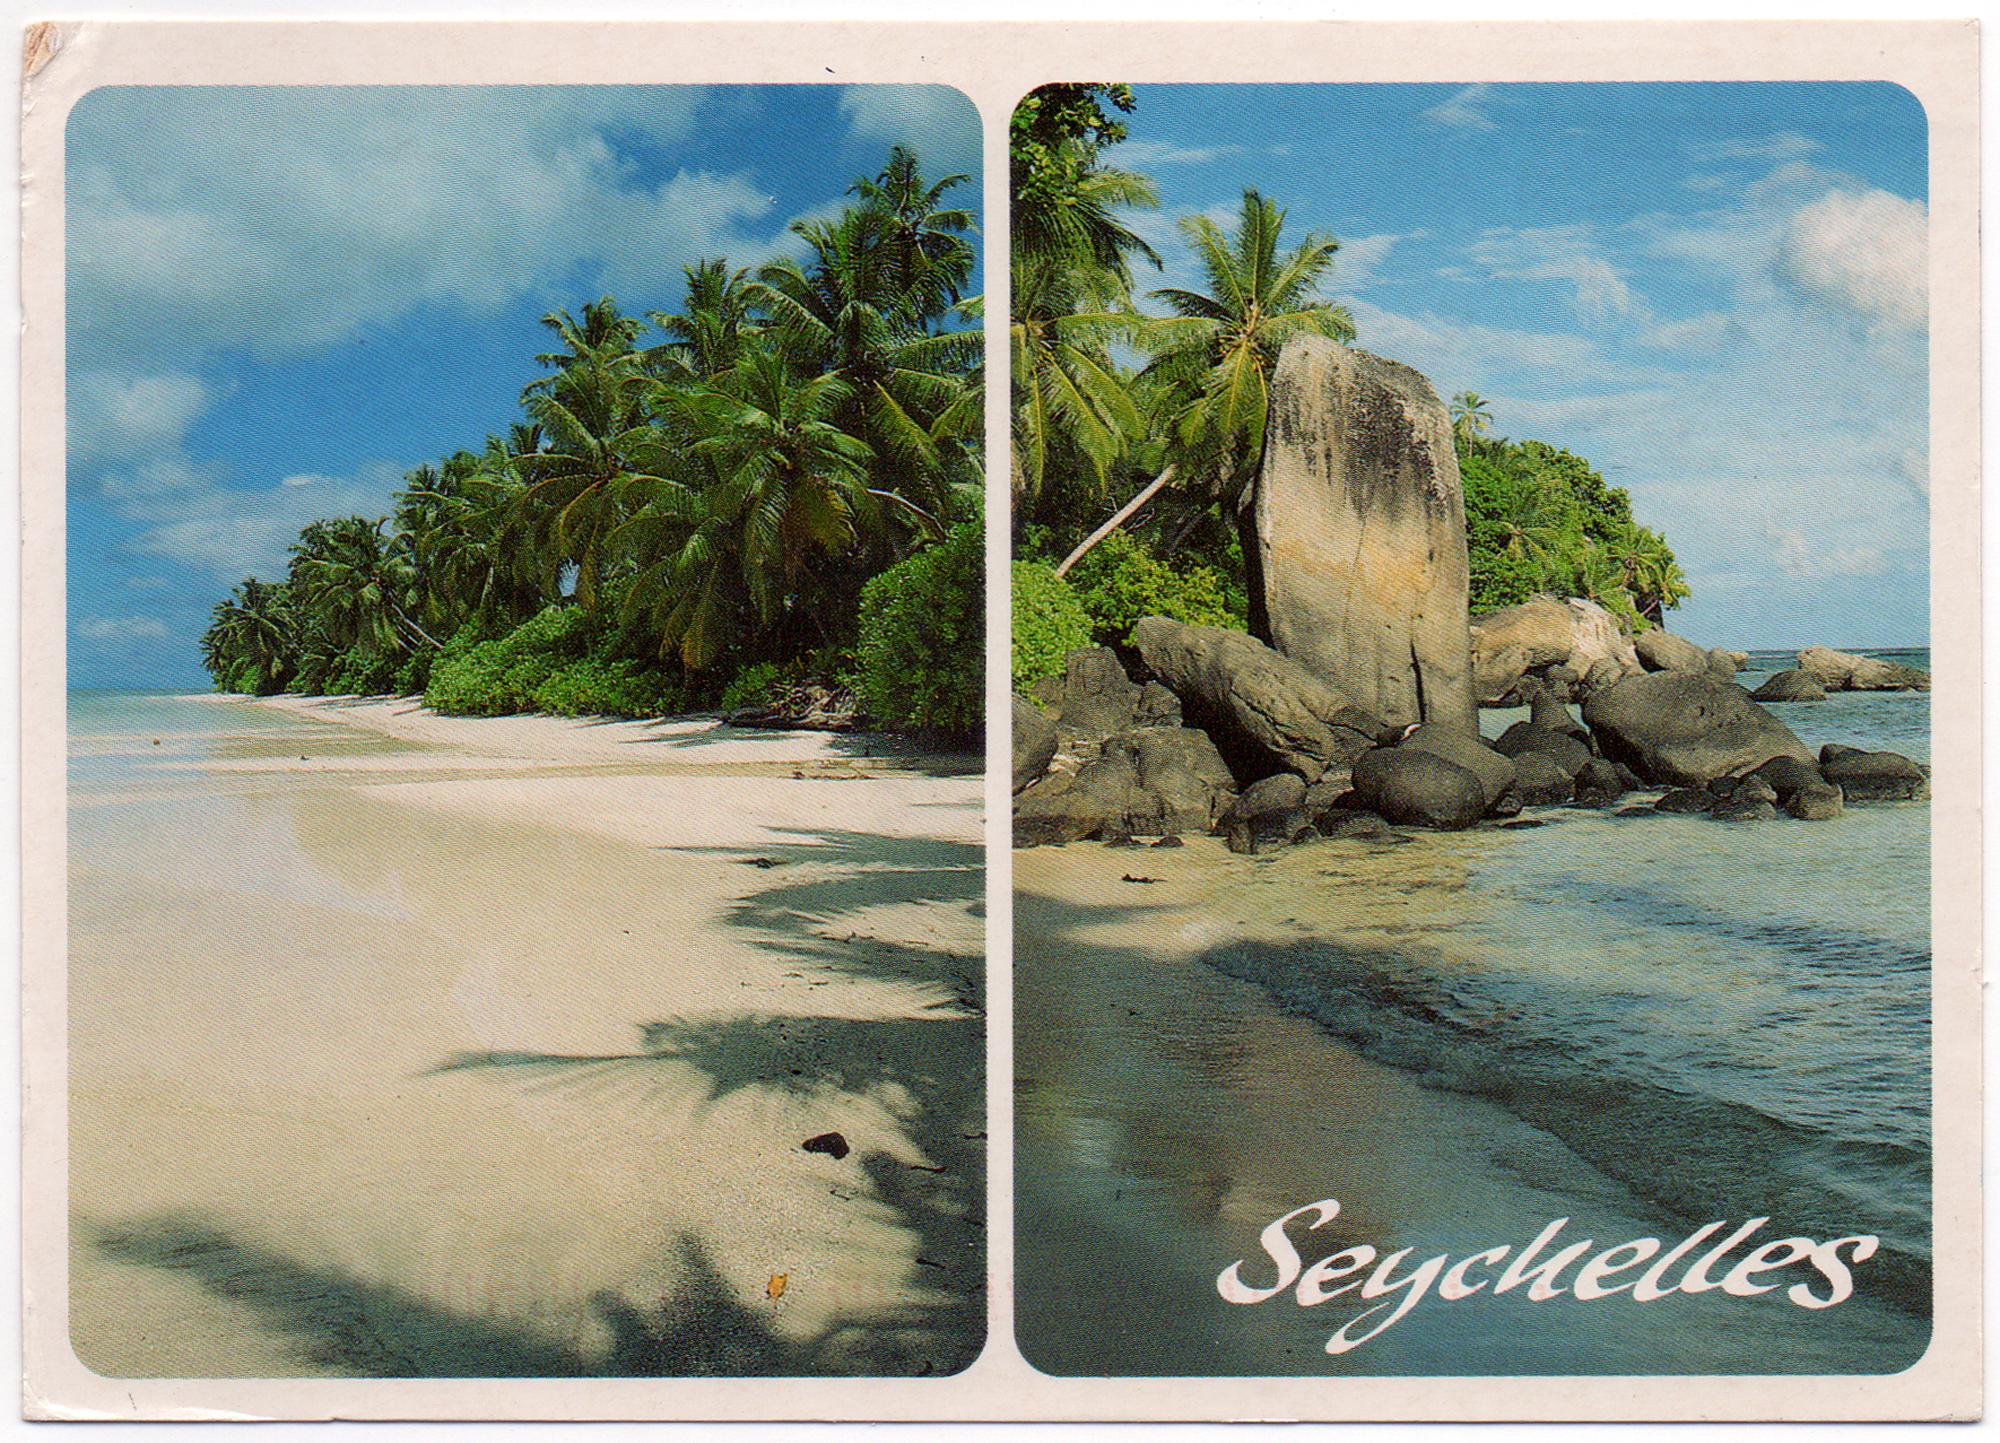 Seattle (2001) - Postcard Seychelles